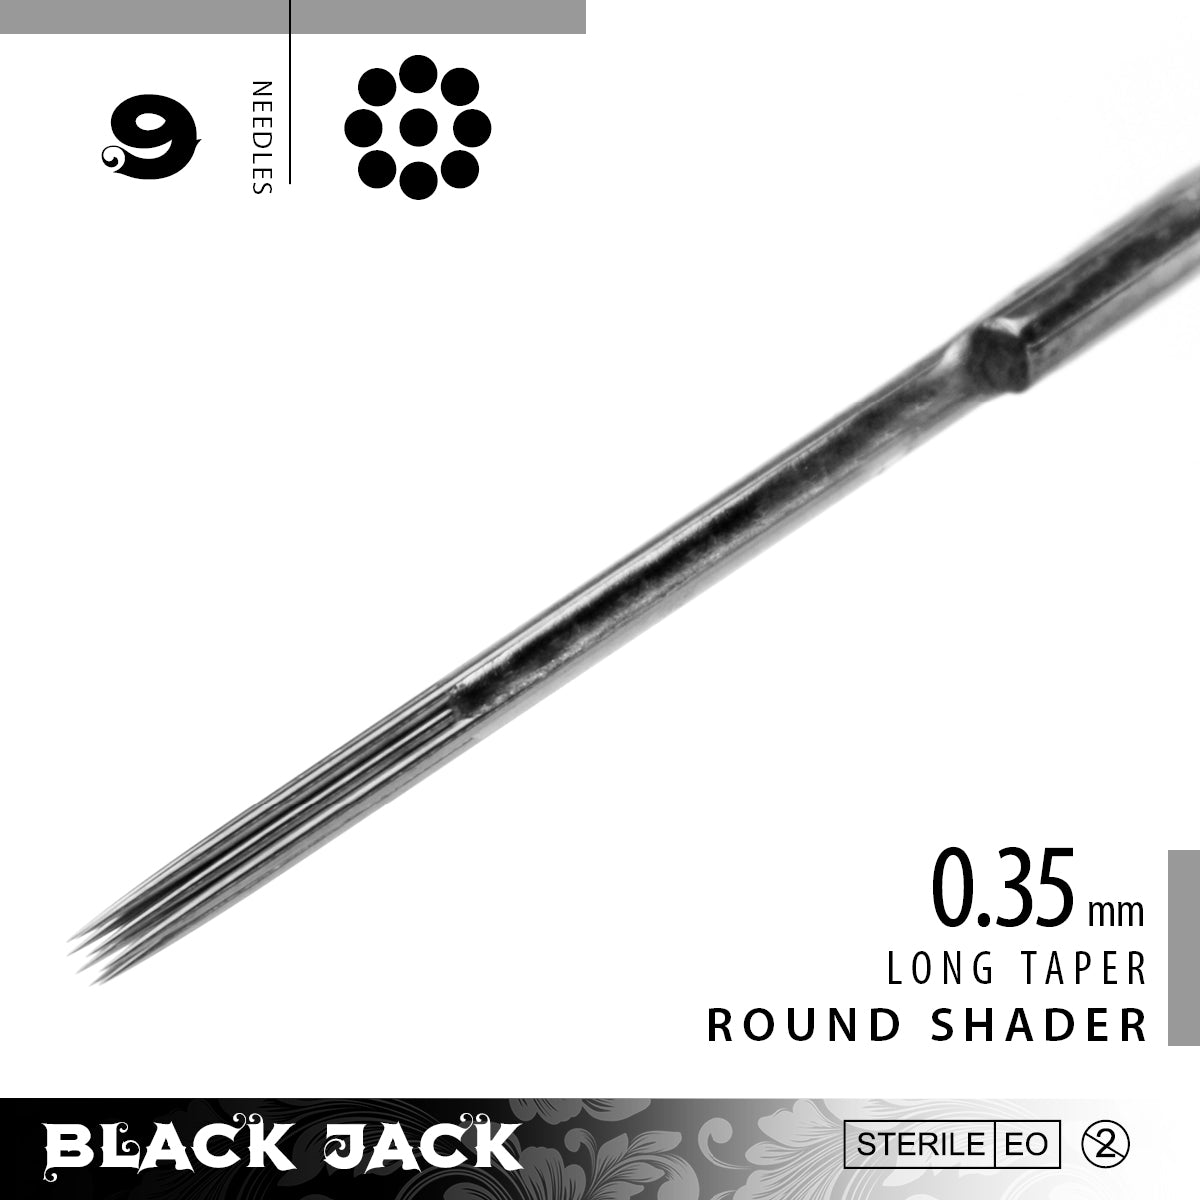 Black Jack Round Shader Bar Needles